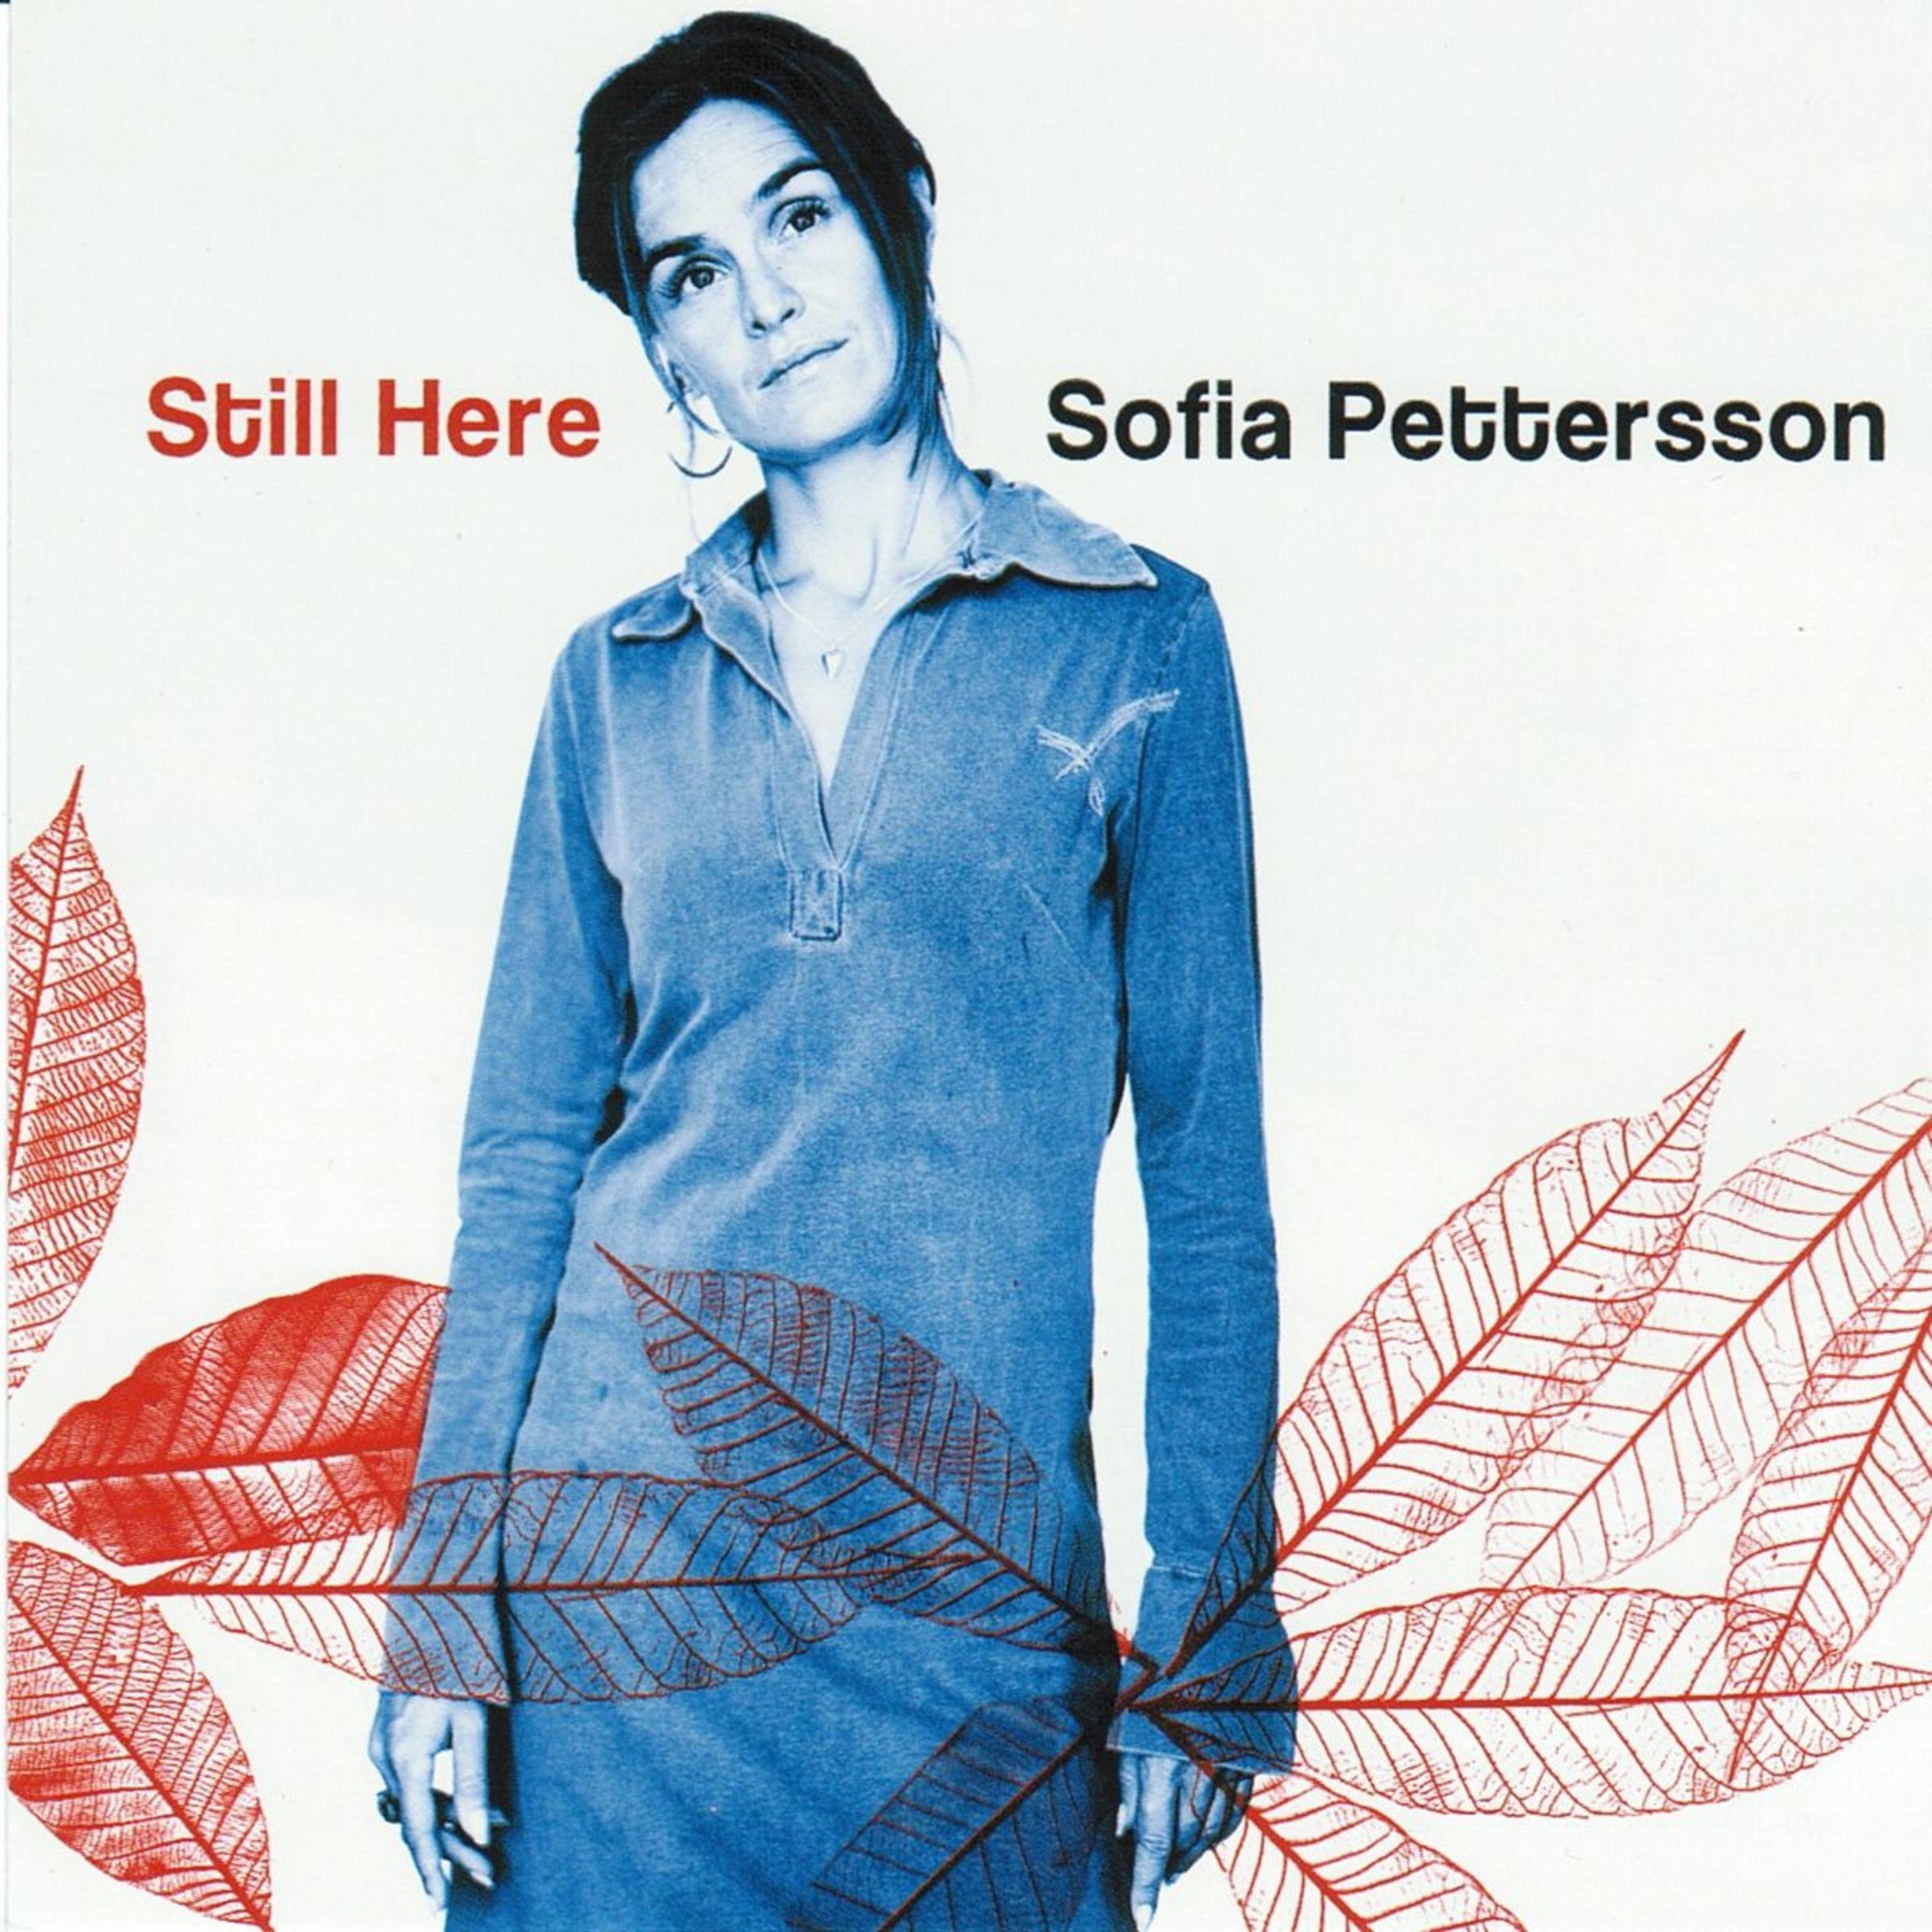 Sofia Pettersson - A Beautiful Story